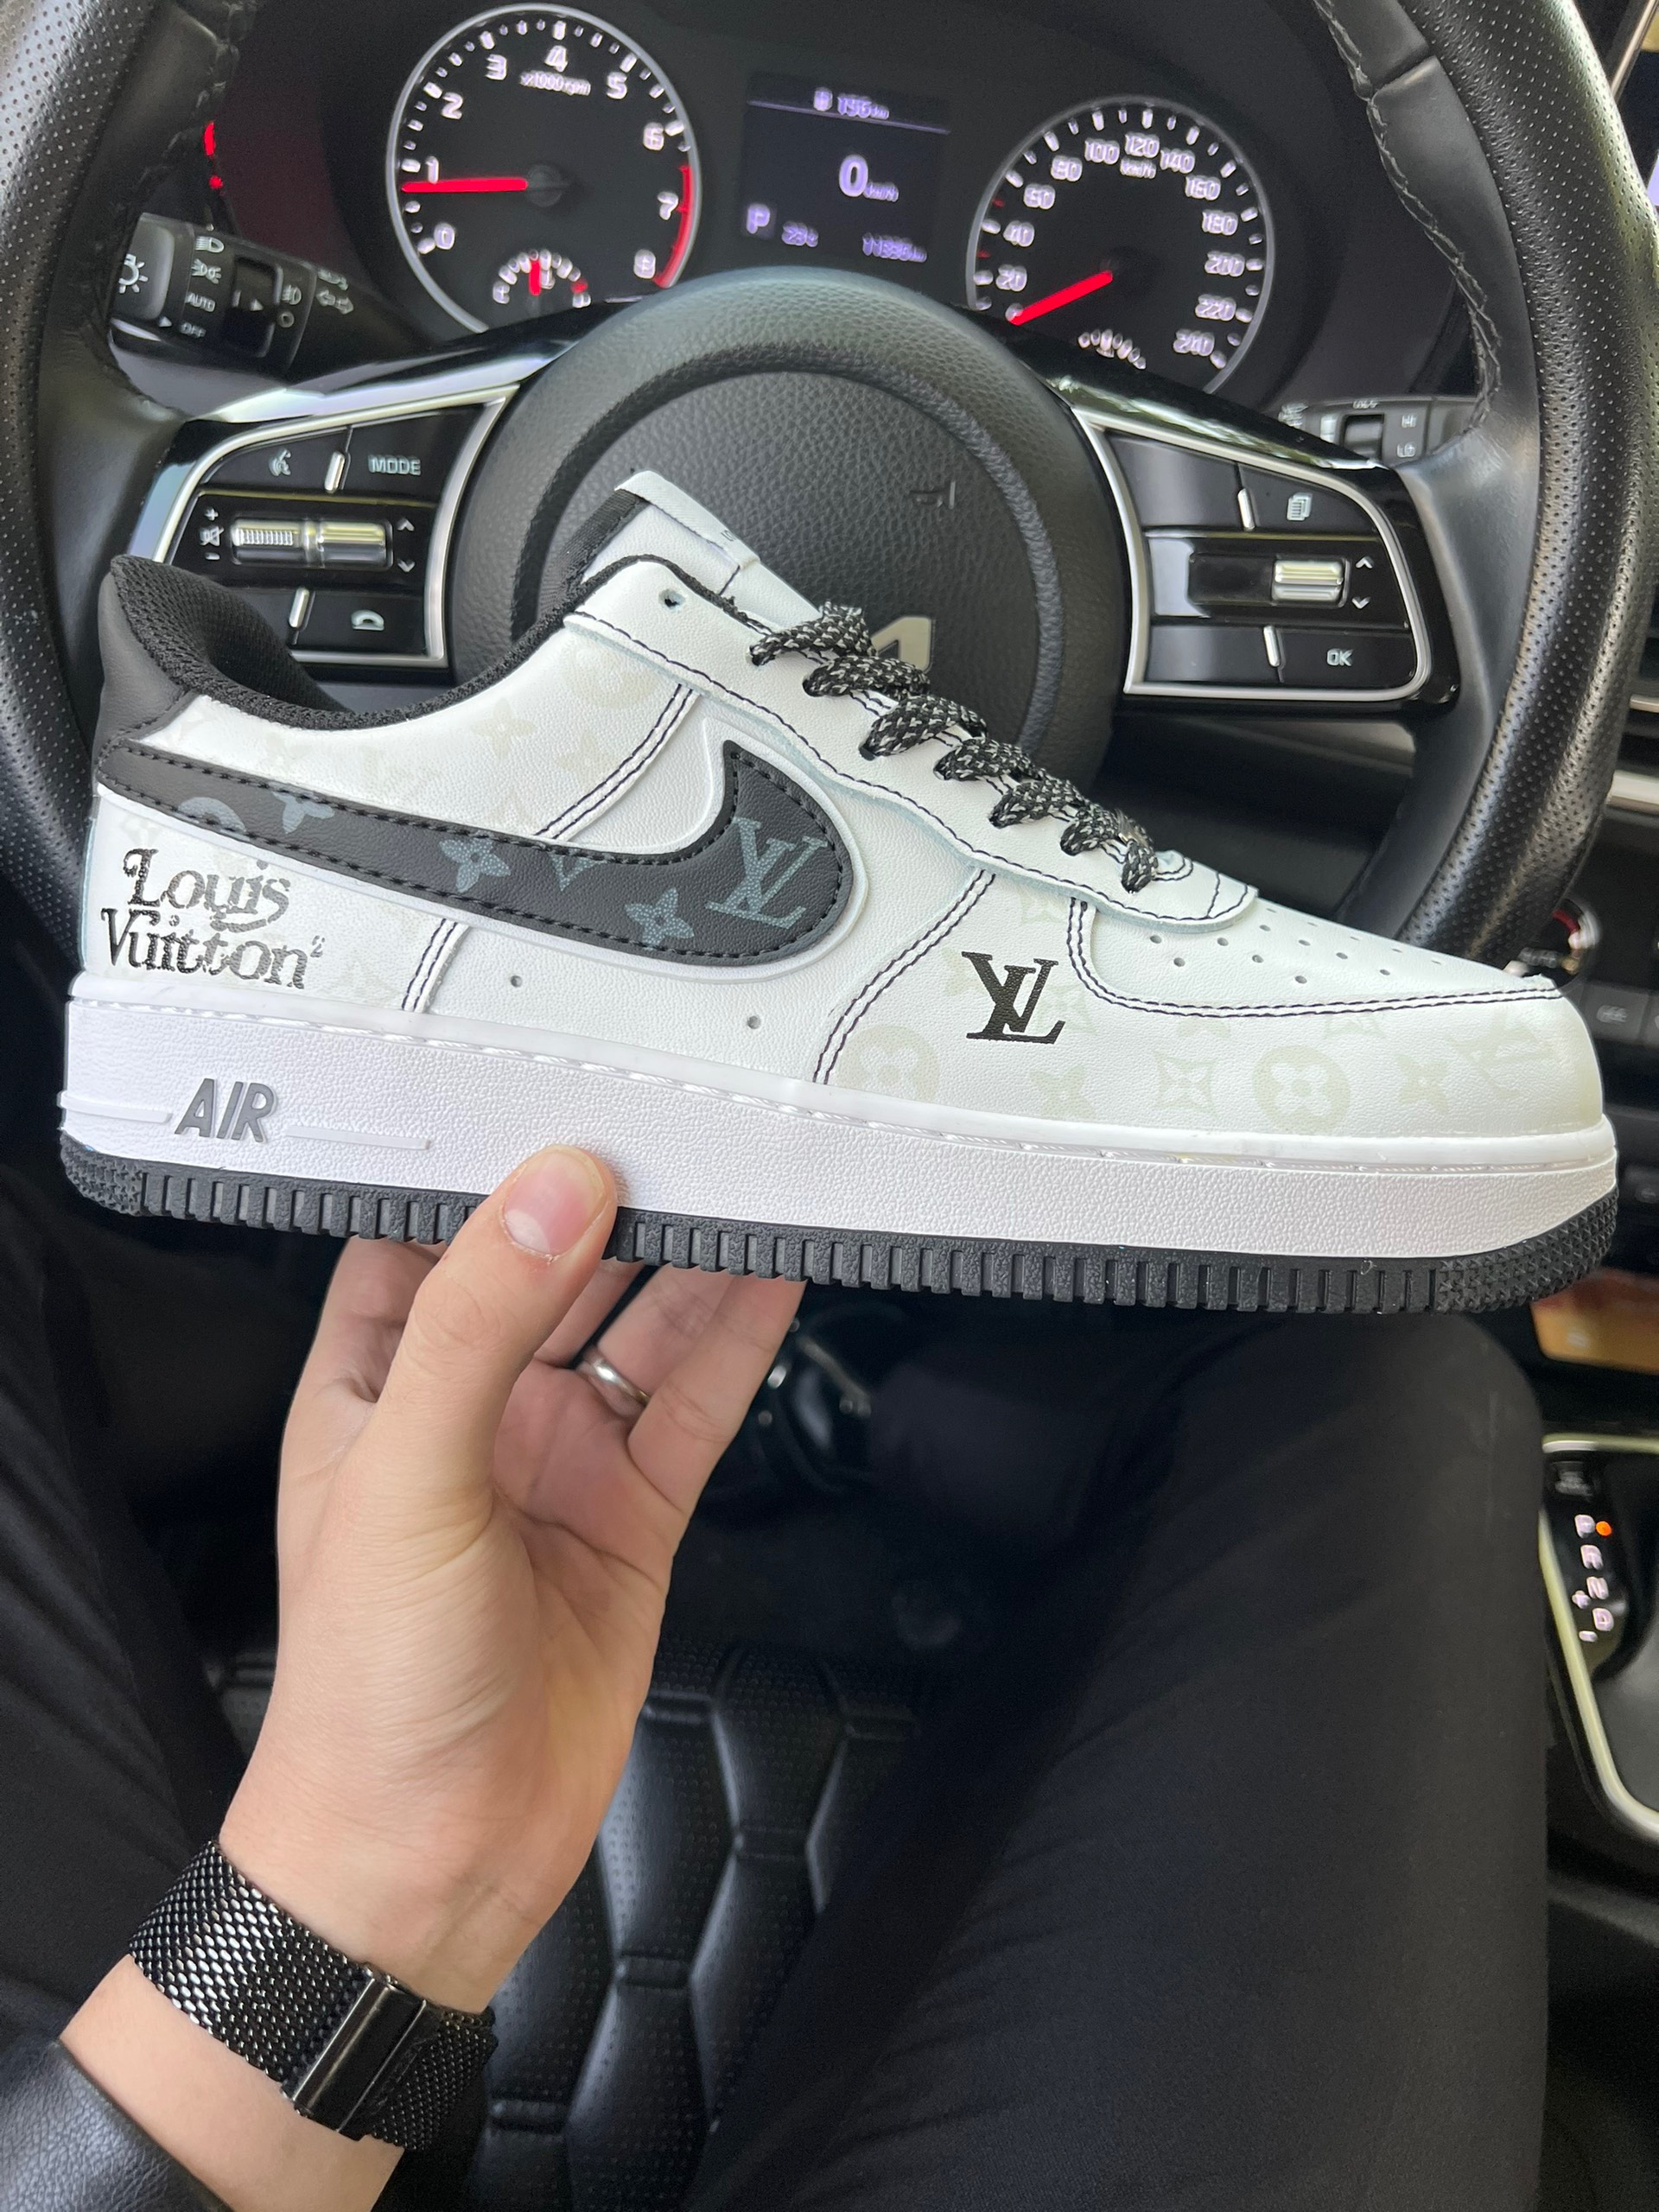 Giày Nike Air Force 1 Low Louis Vuitton White Black Siêu Cấp